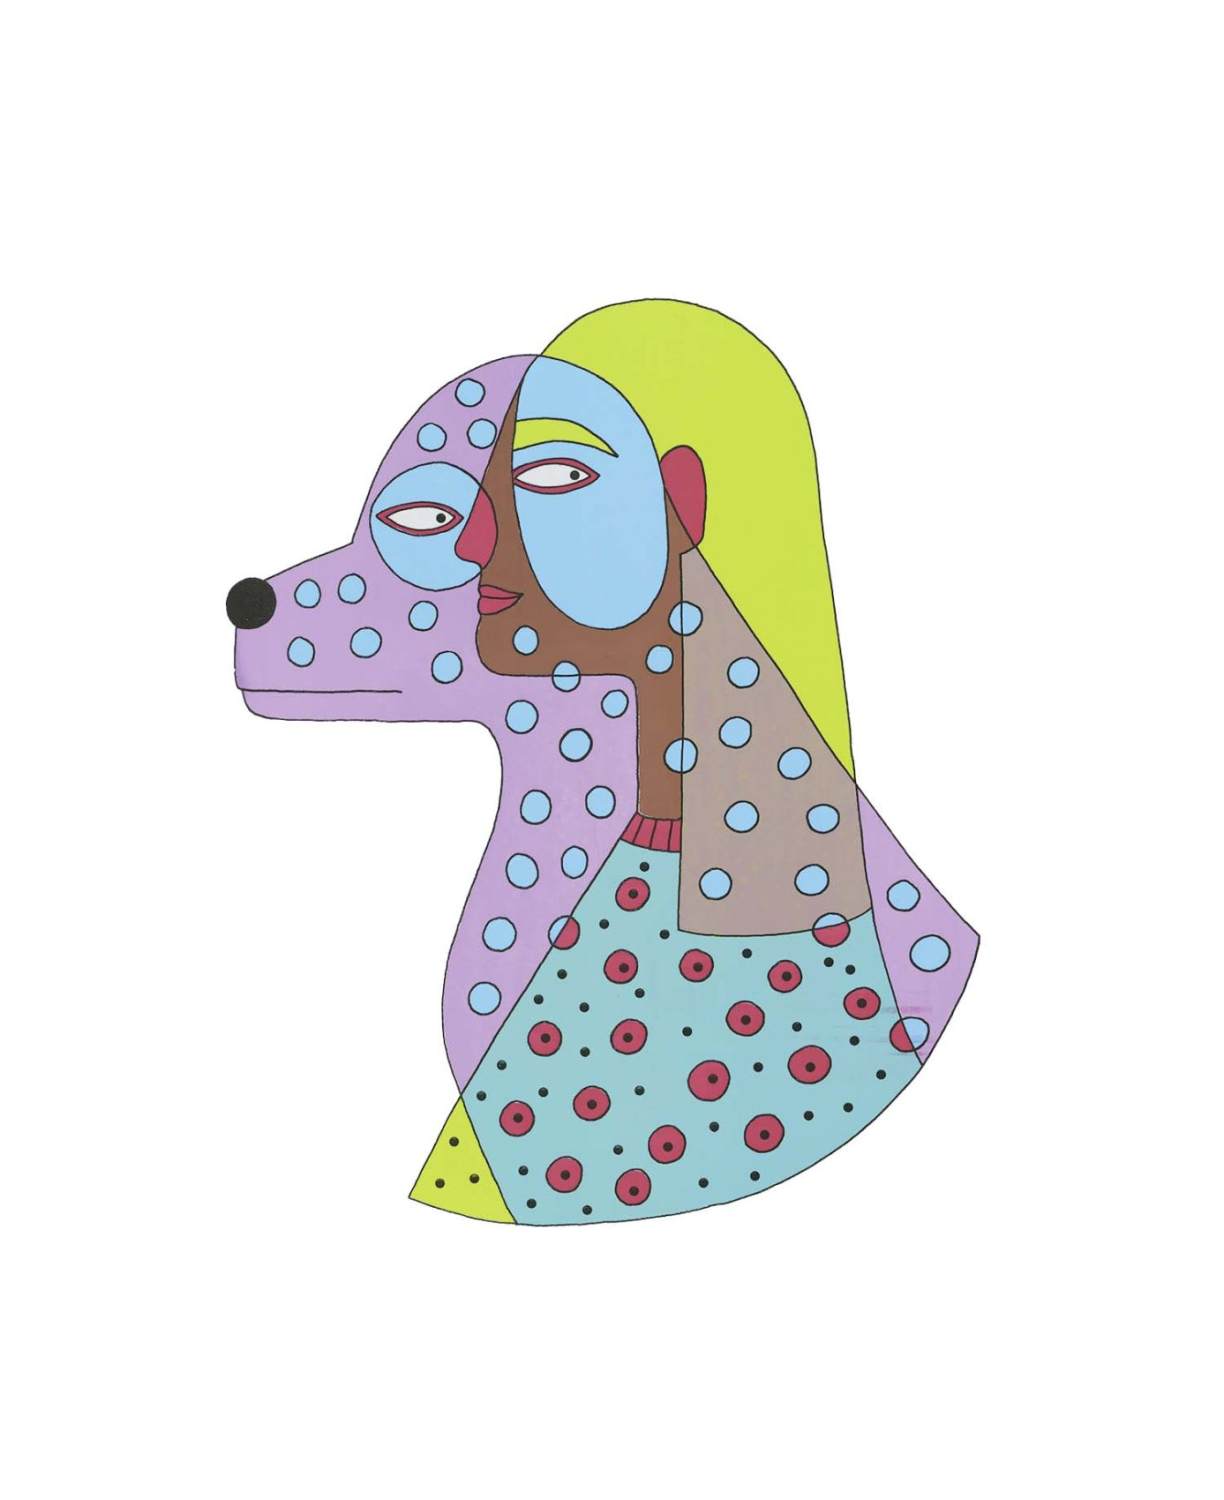 yonina-rollack-friendship-playful-art-silk-screen-printing-human-and-dog-online-art-gallery